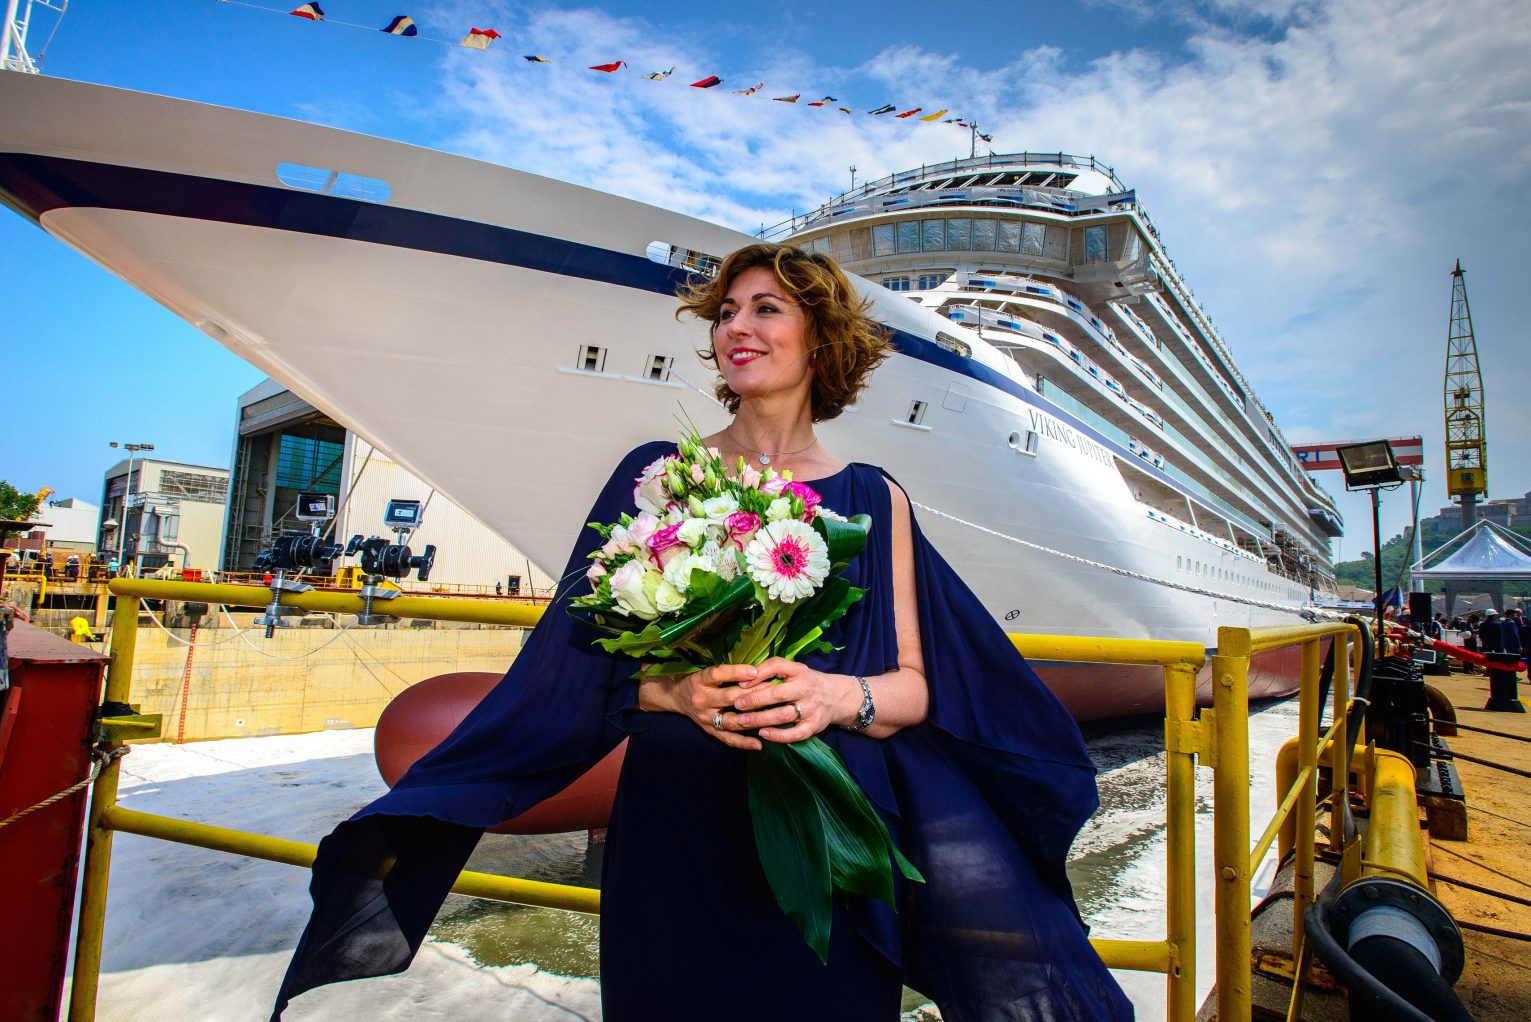 Viking Ocean cruises launches its sixth ship